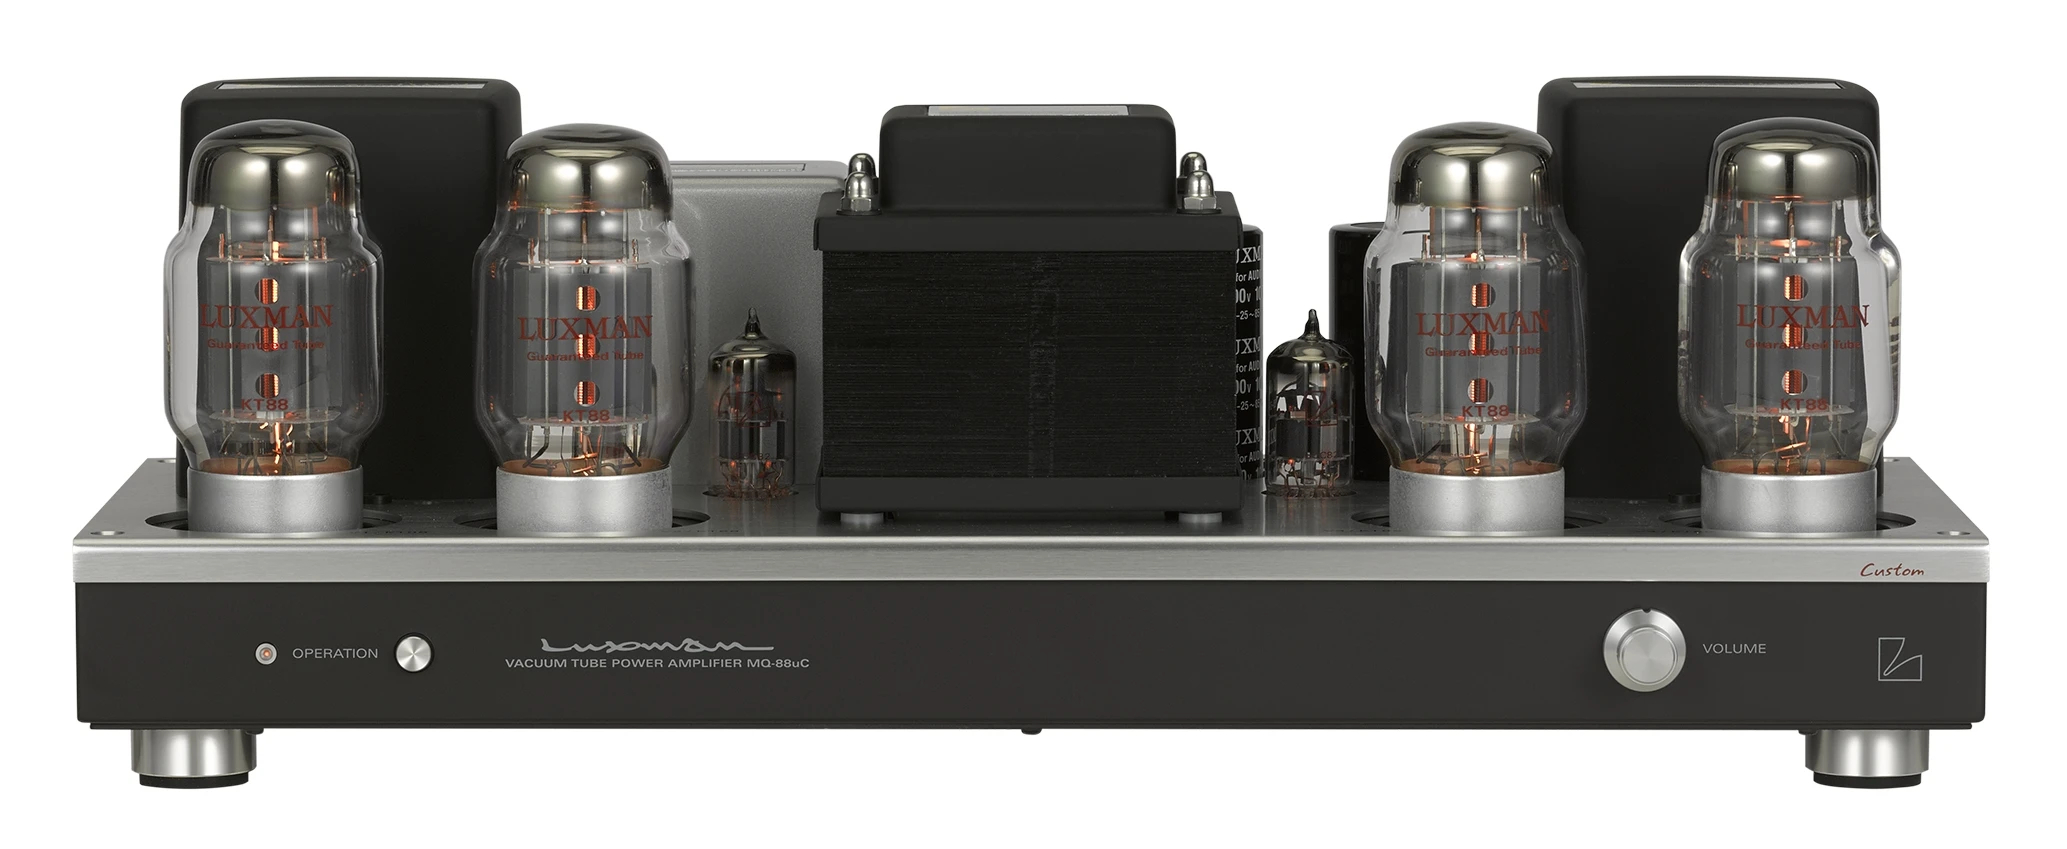 Luxman MQ-88uC, Stereo Röhrenendstufe